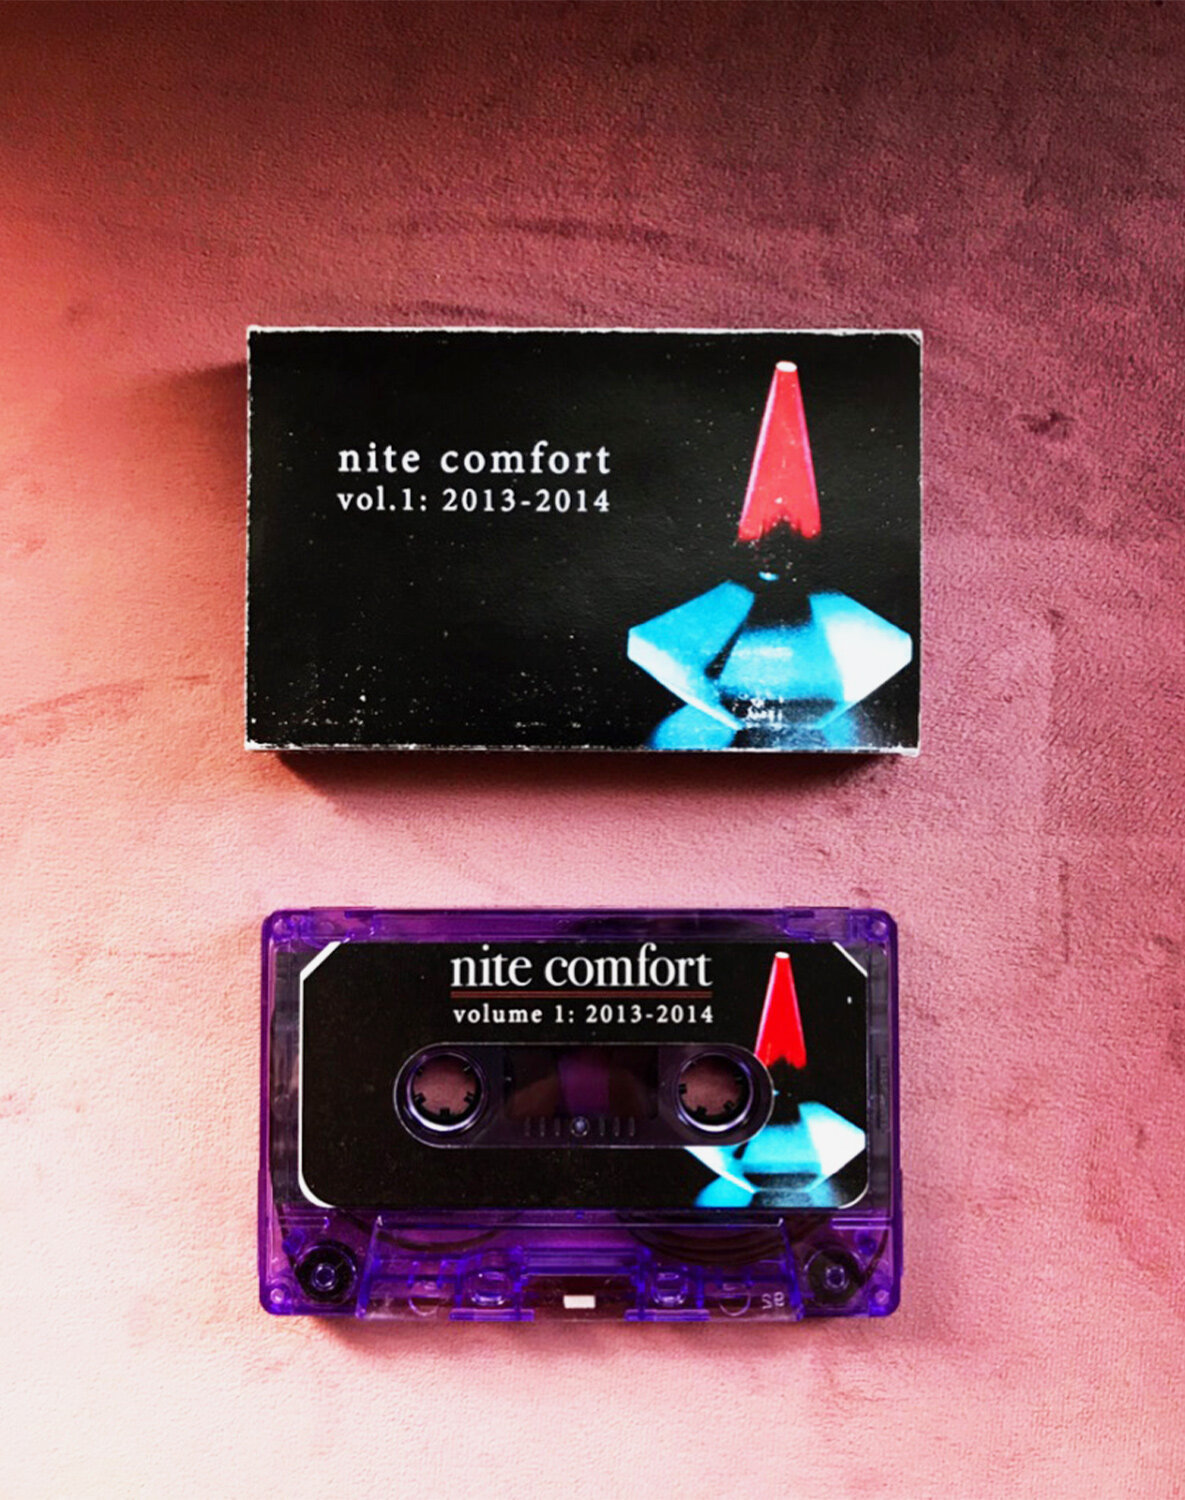 Nite Comfort Compilation Volume 1 2013-2014